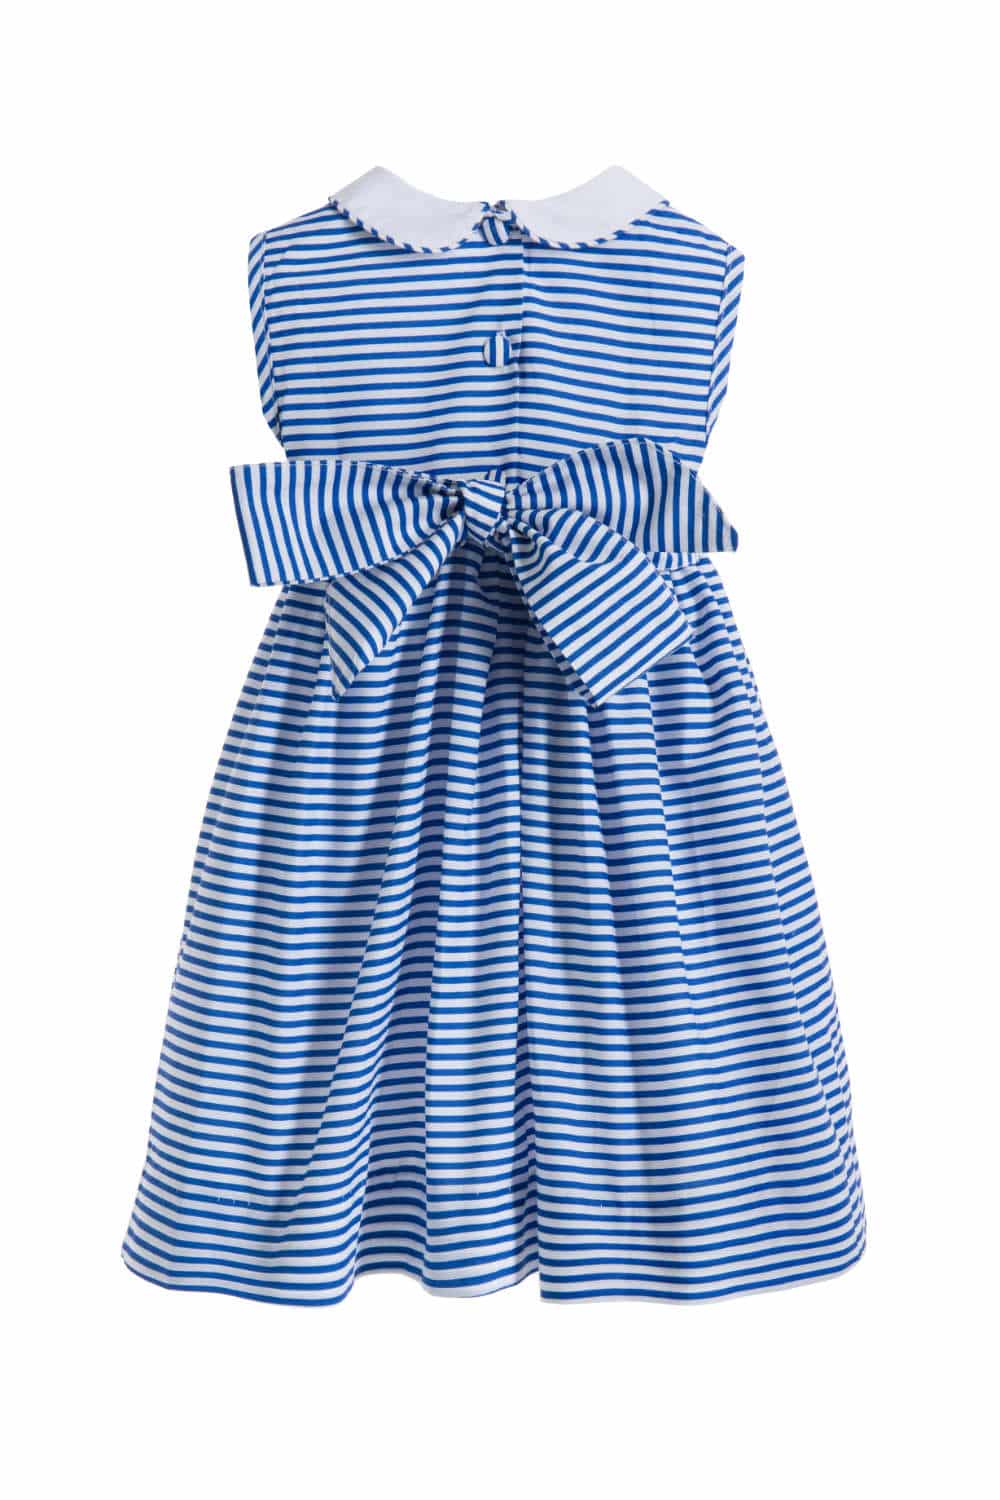 Charlotte | Blue & White Striped Hand Smocked Sailing Dress - Annafie